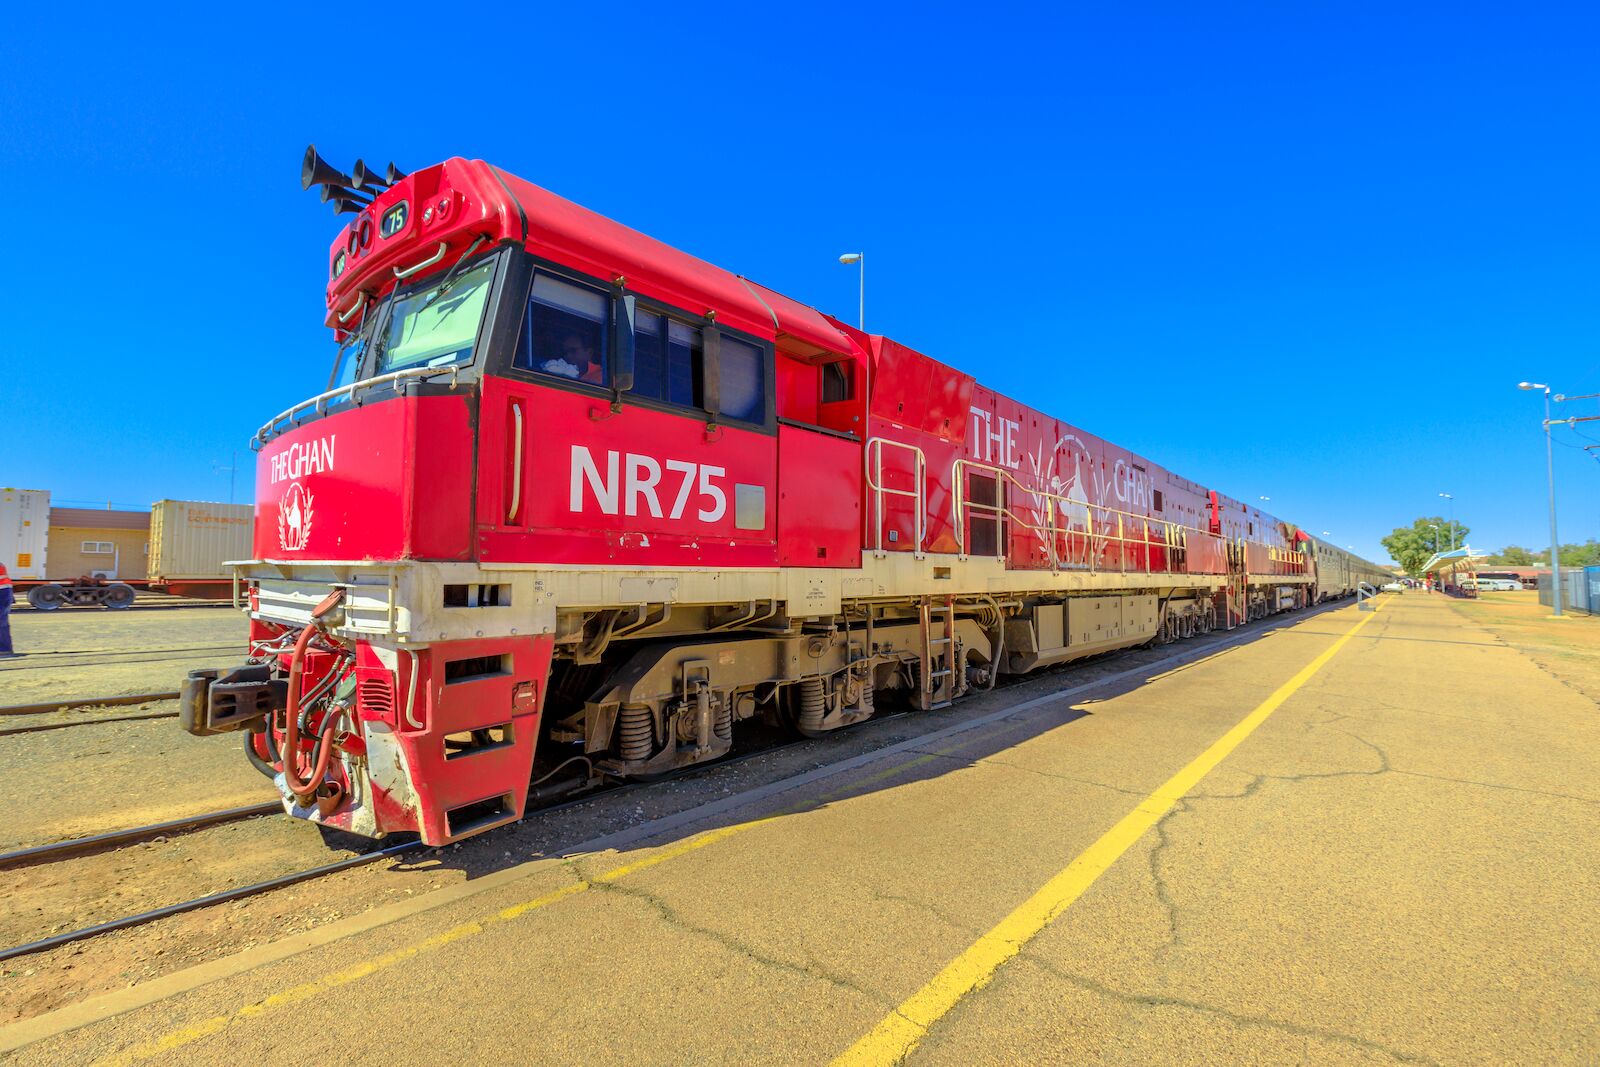 The Ghan train in Australia runs between Adelaide and Darwin